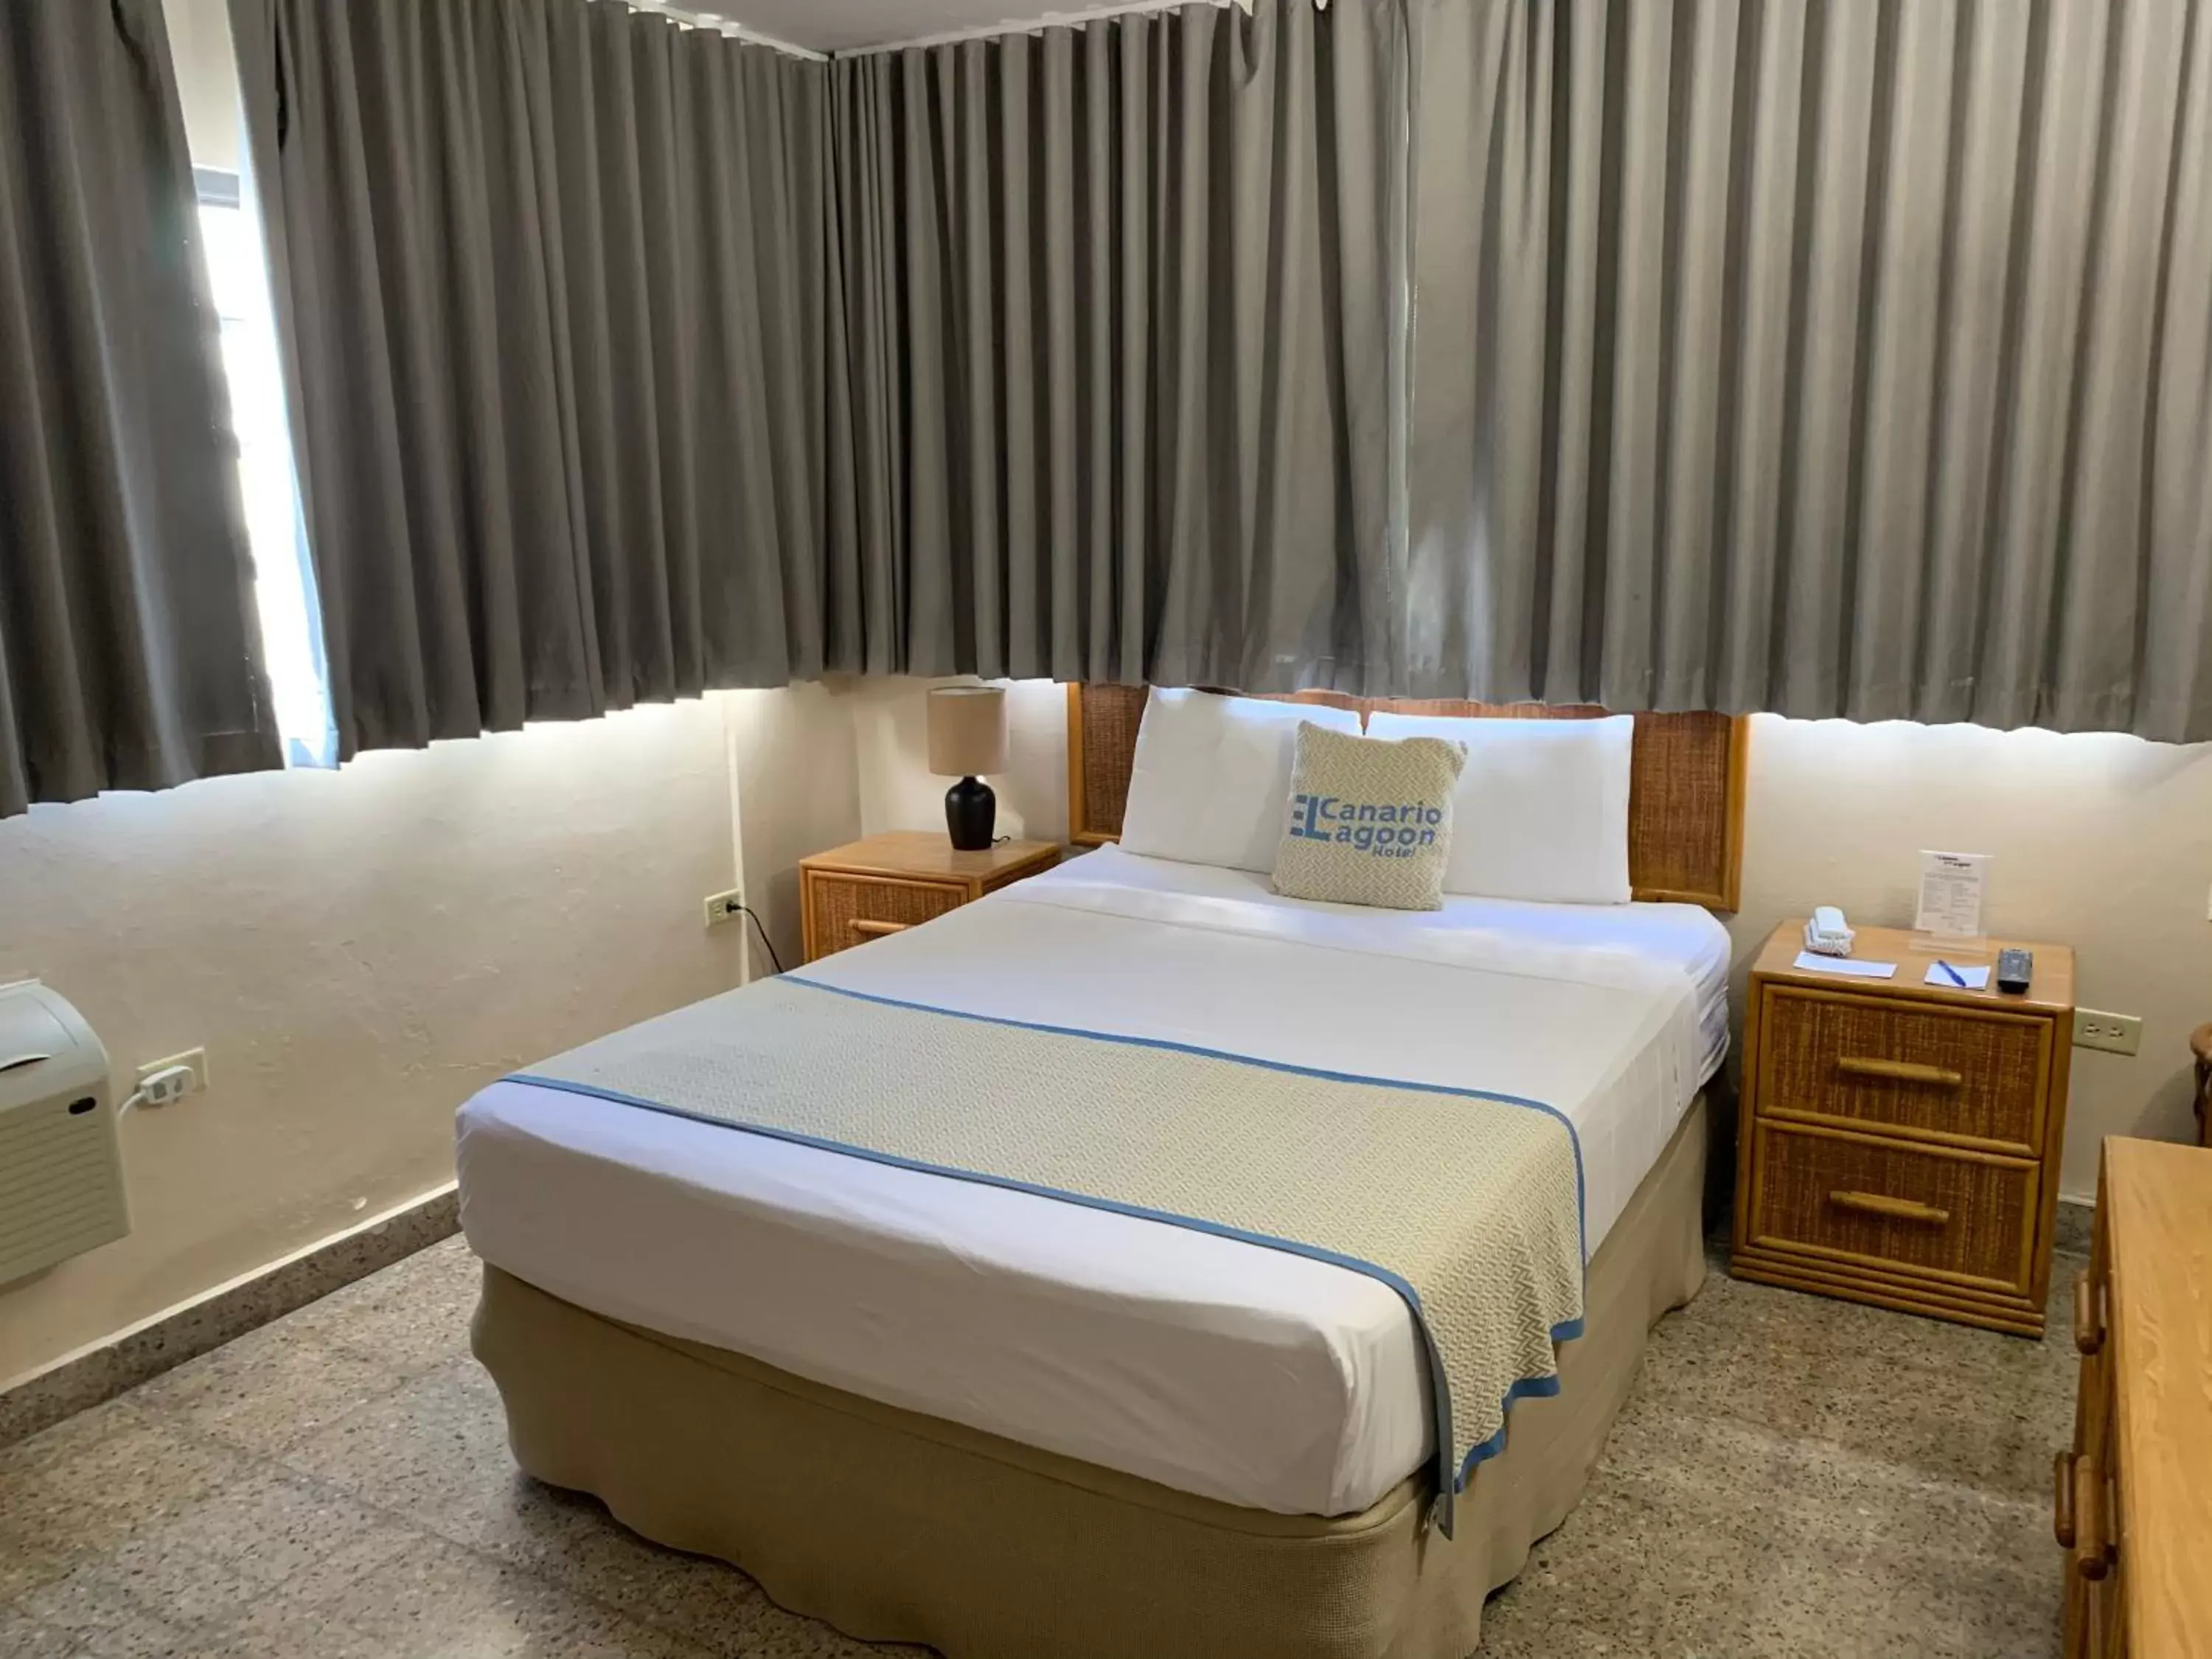 Bed in Canario Lagoon Hotel